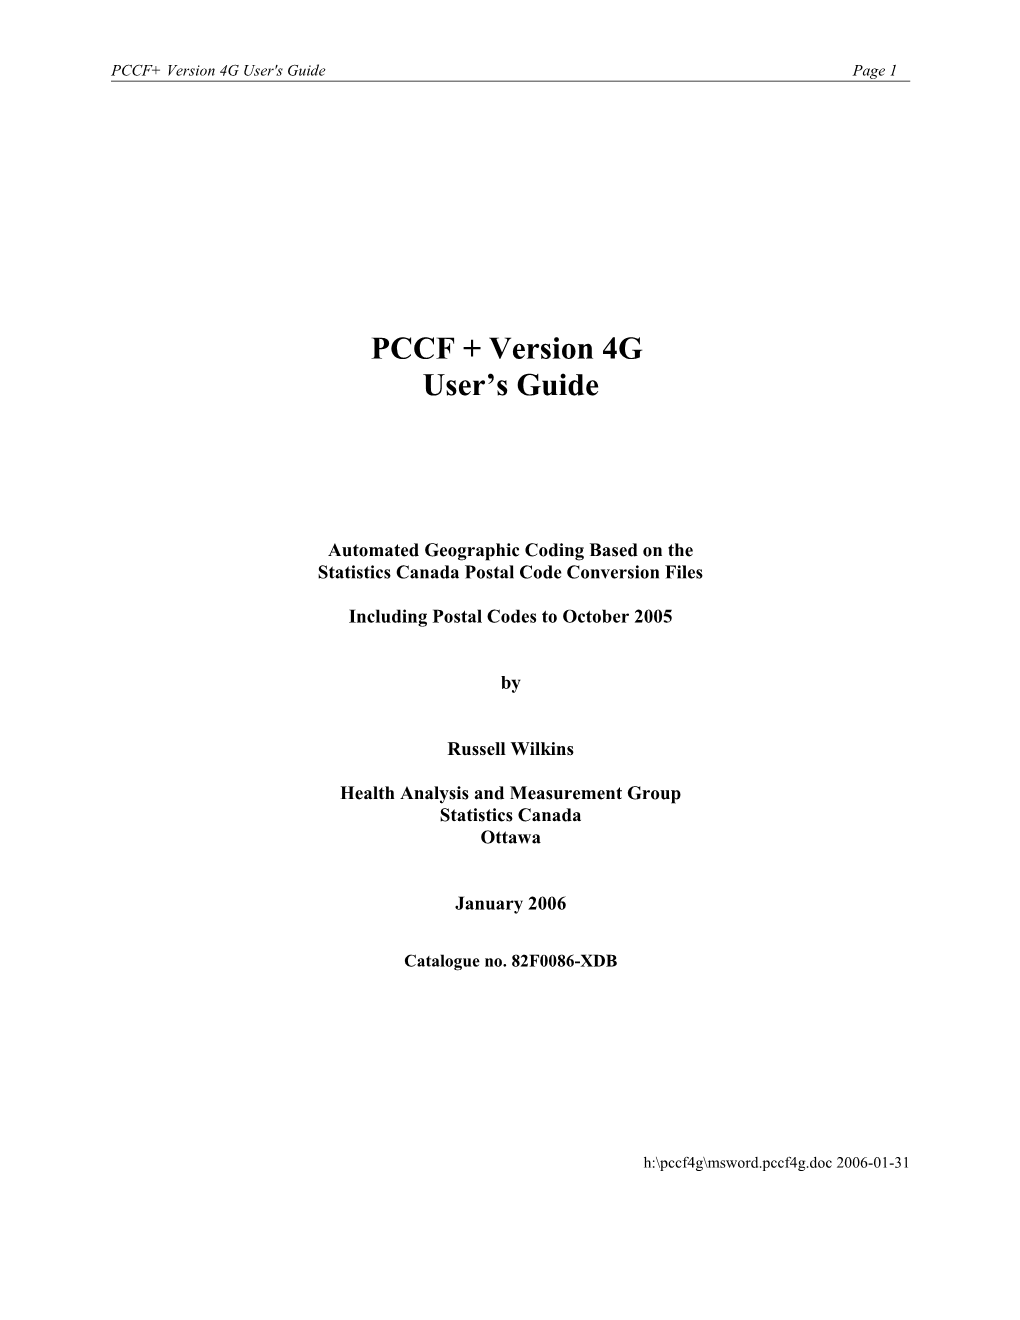 Geocodes/PCCF Version 2 User's Guidepage